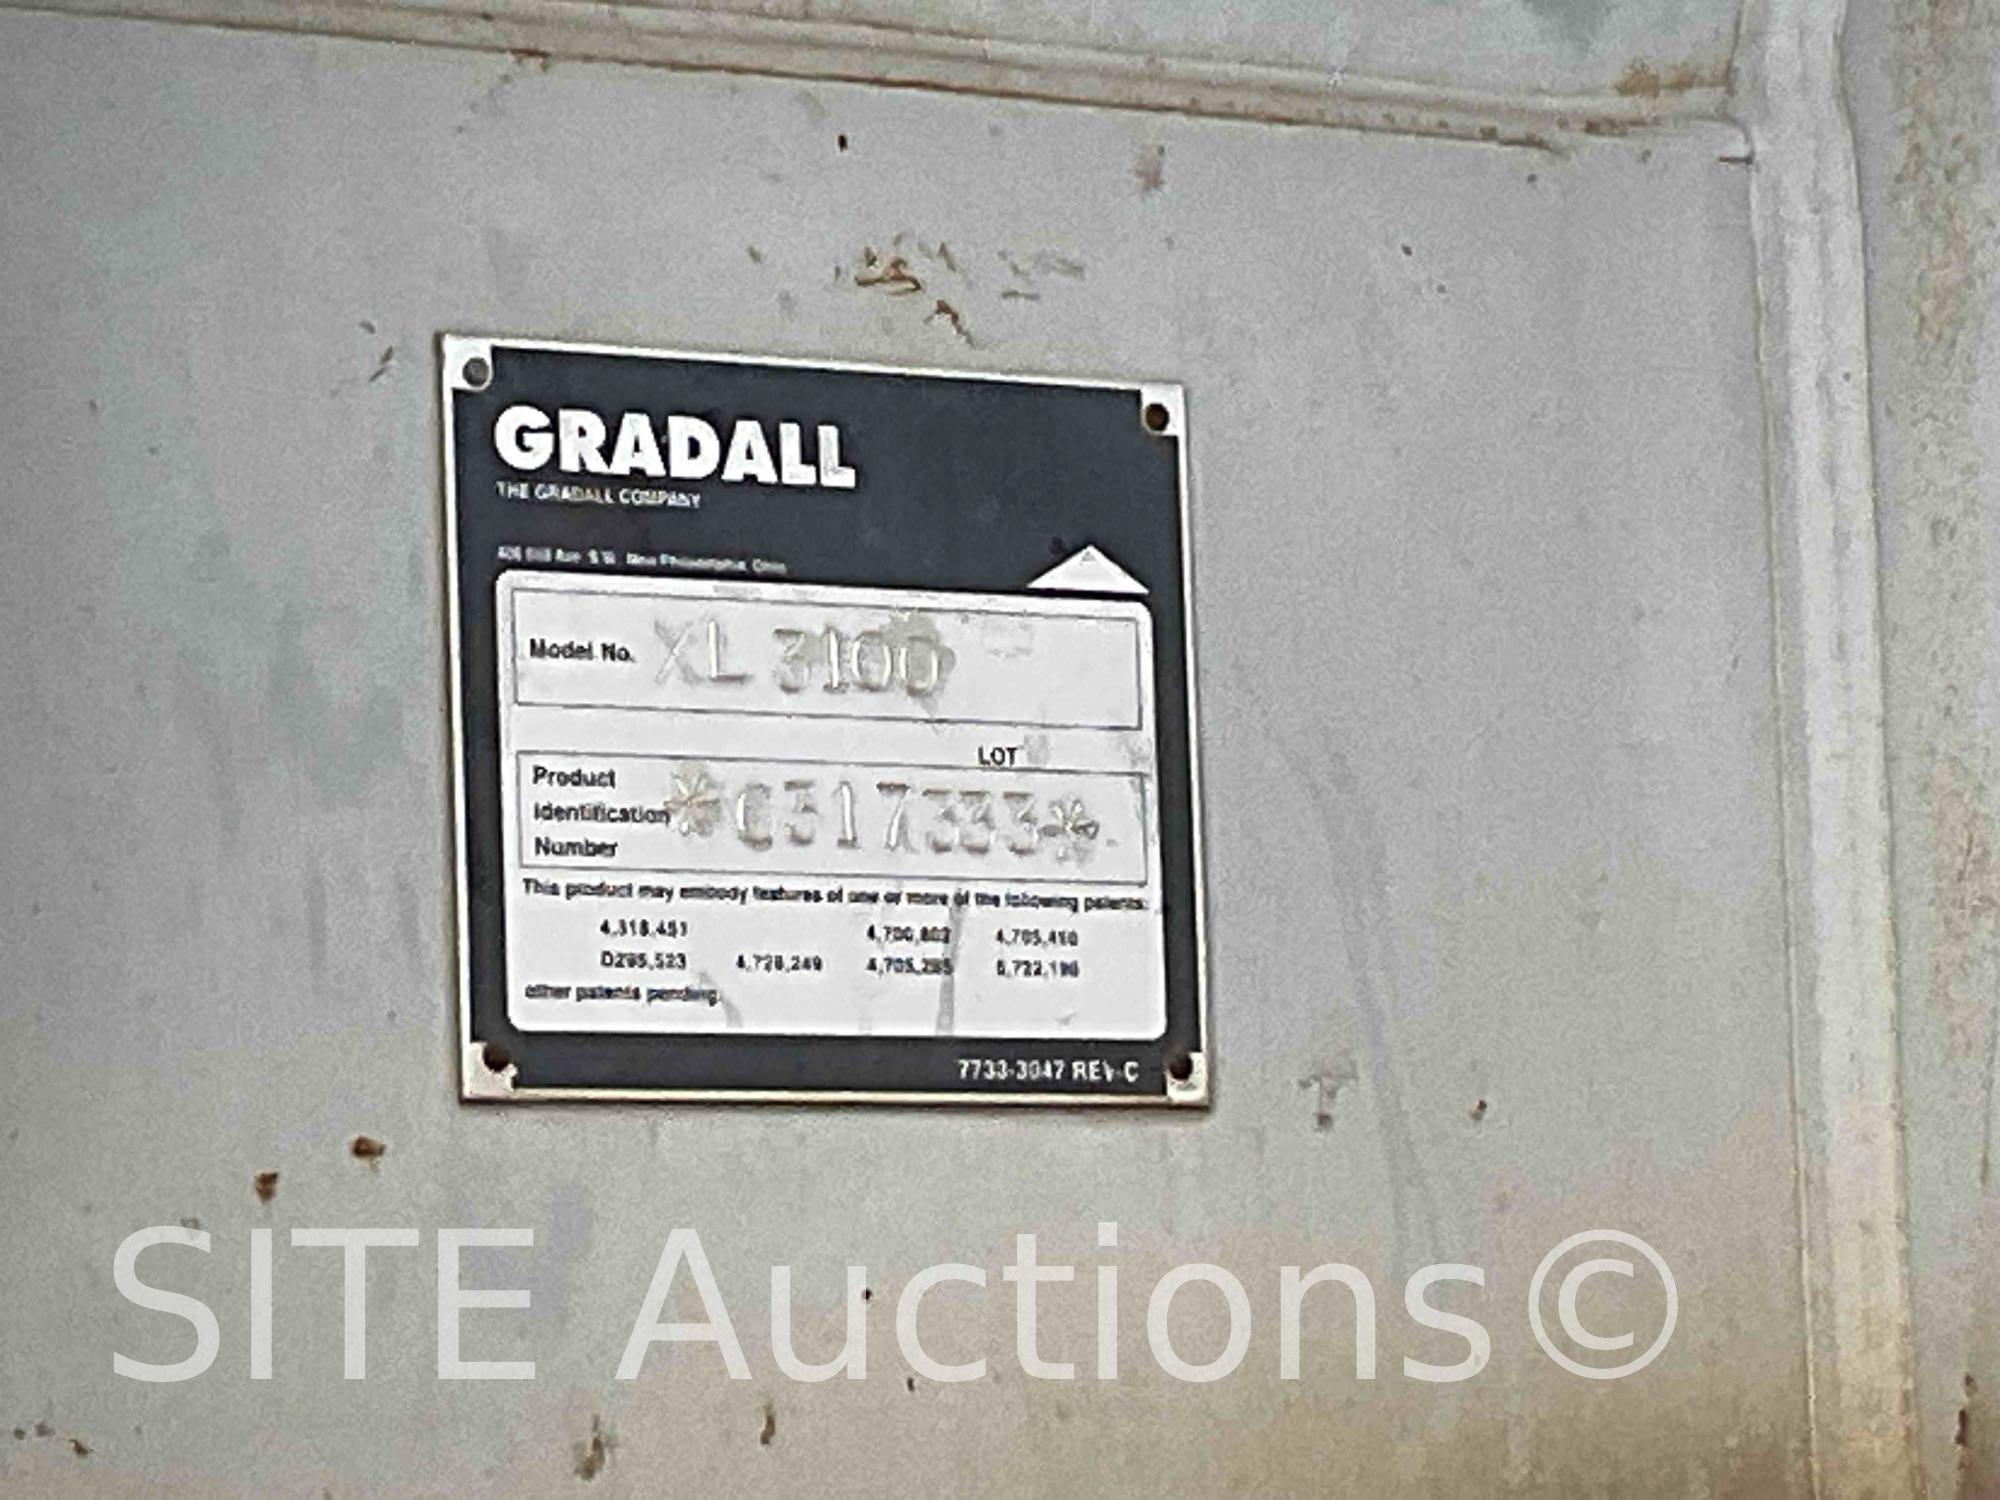 2001 Gradall XL3100 Wheeled Excavator